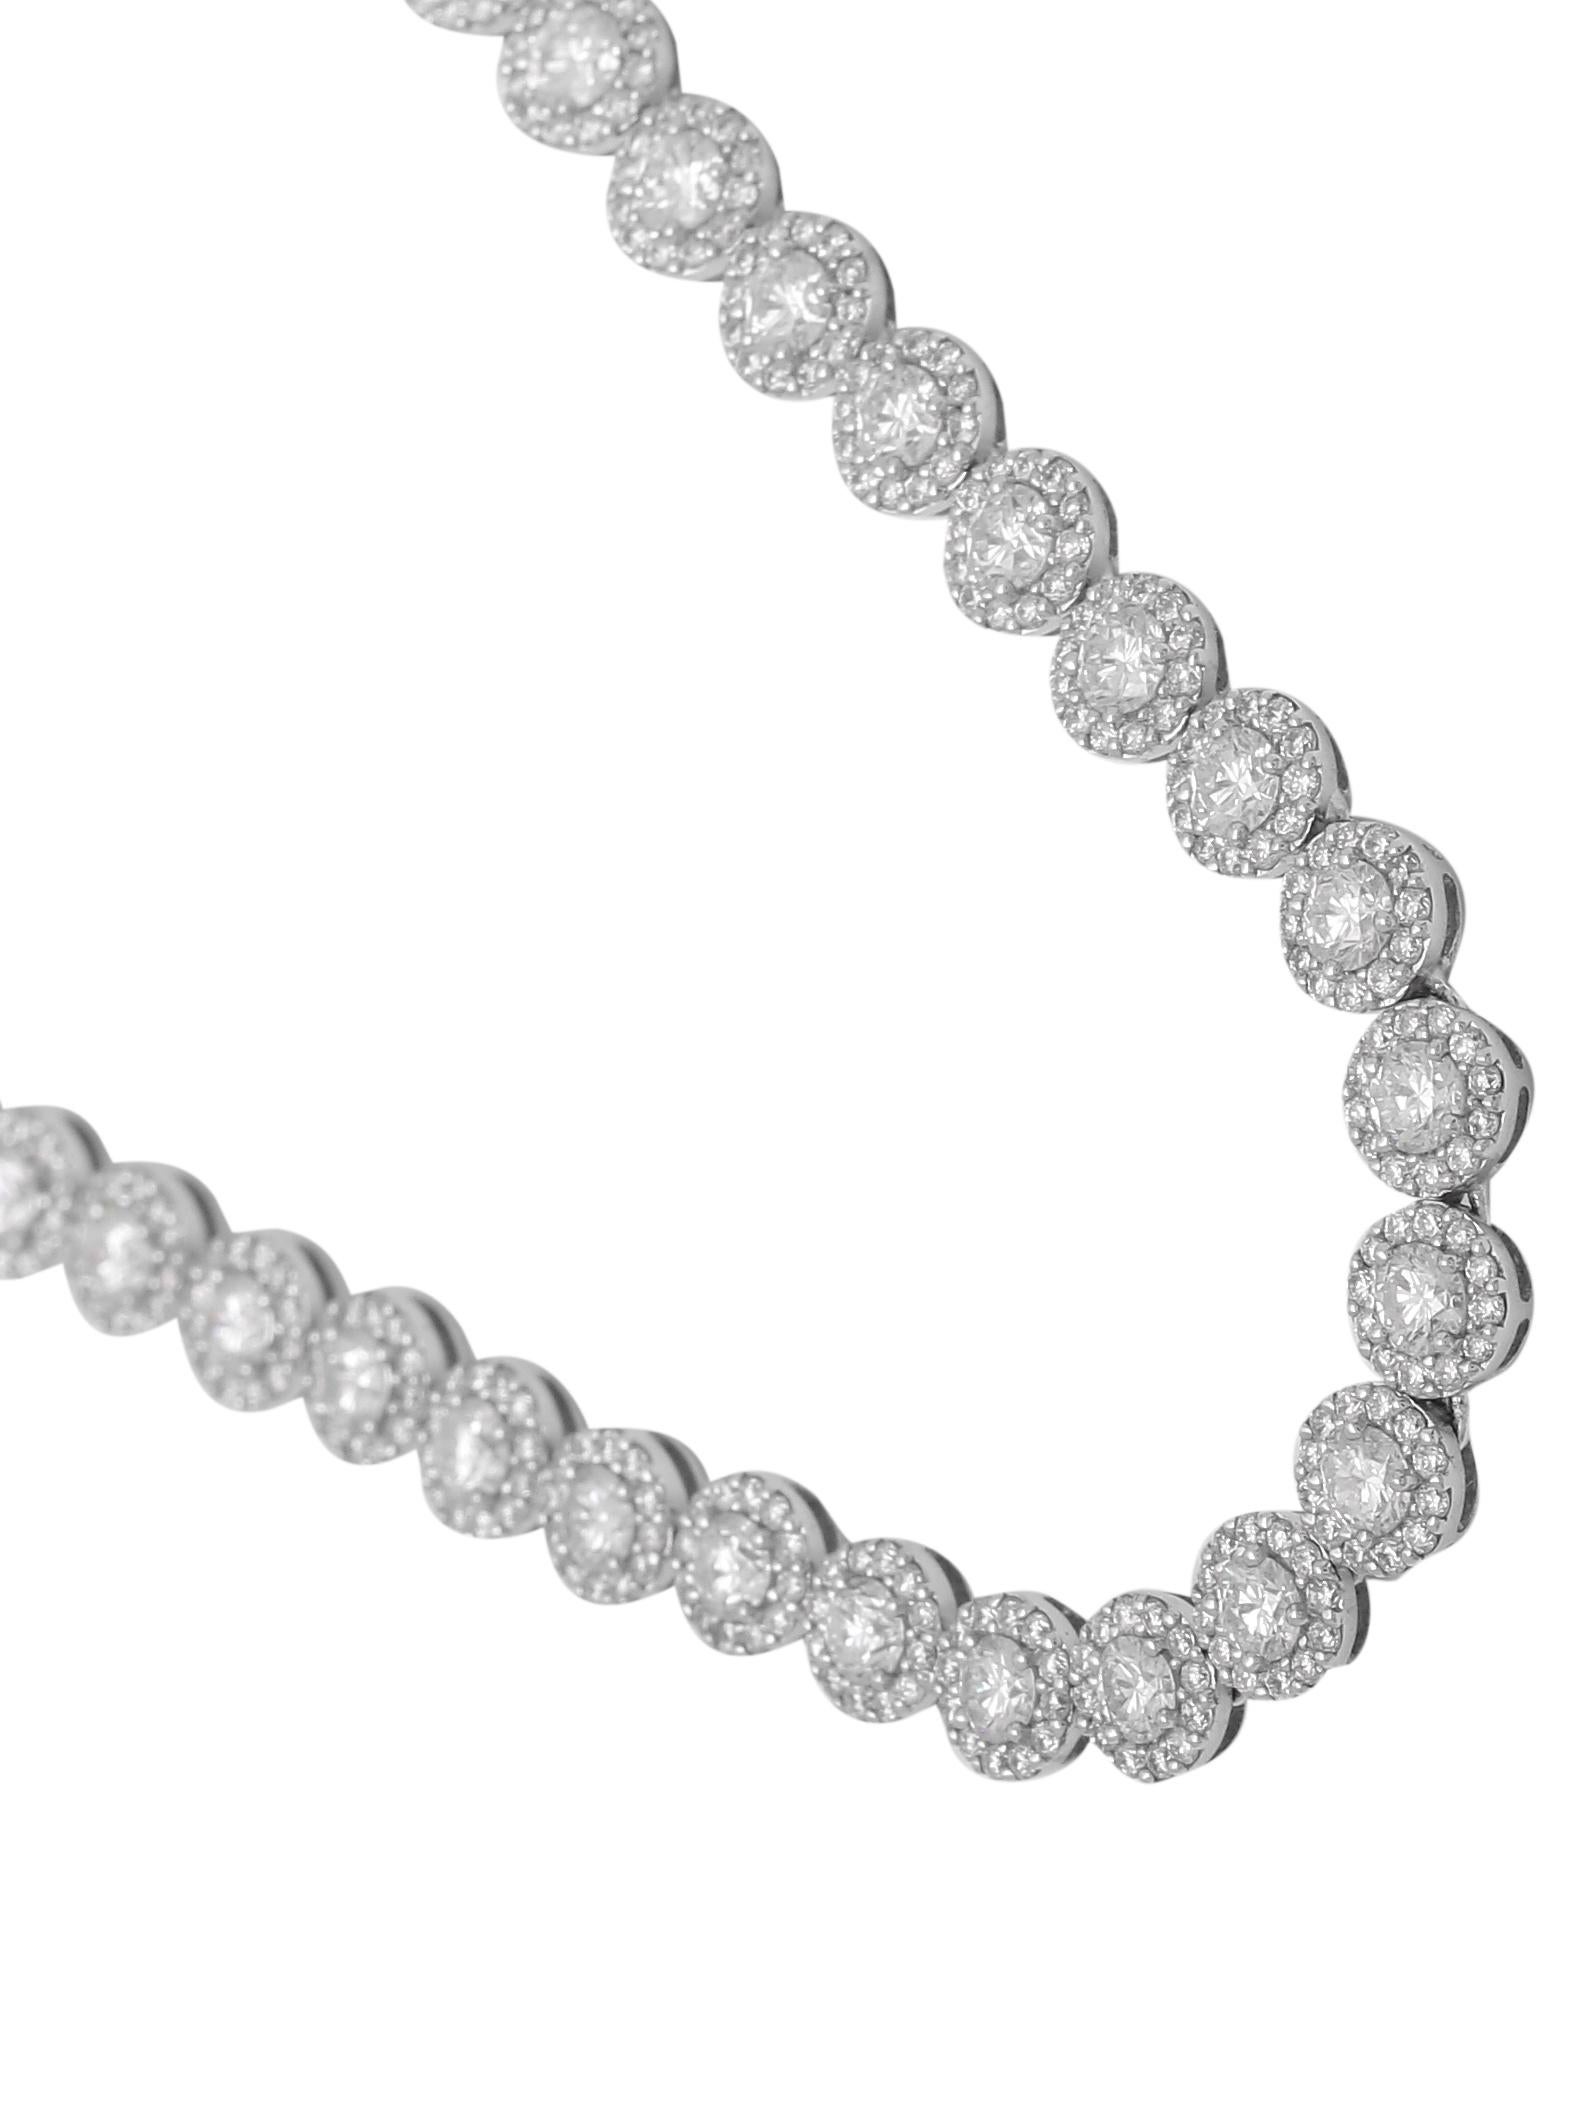 Round Cut 14.71 Carat Top Quality Diamond Classic Necklace in 18 Karat White Gold